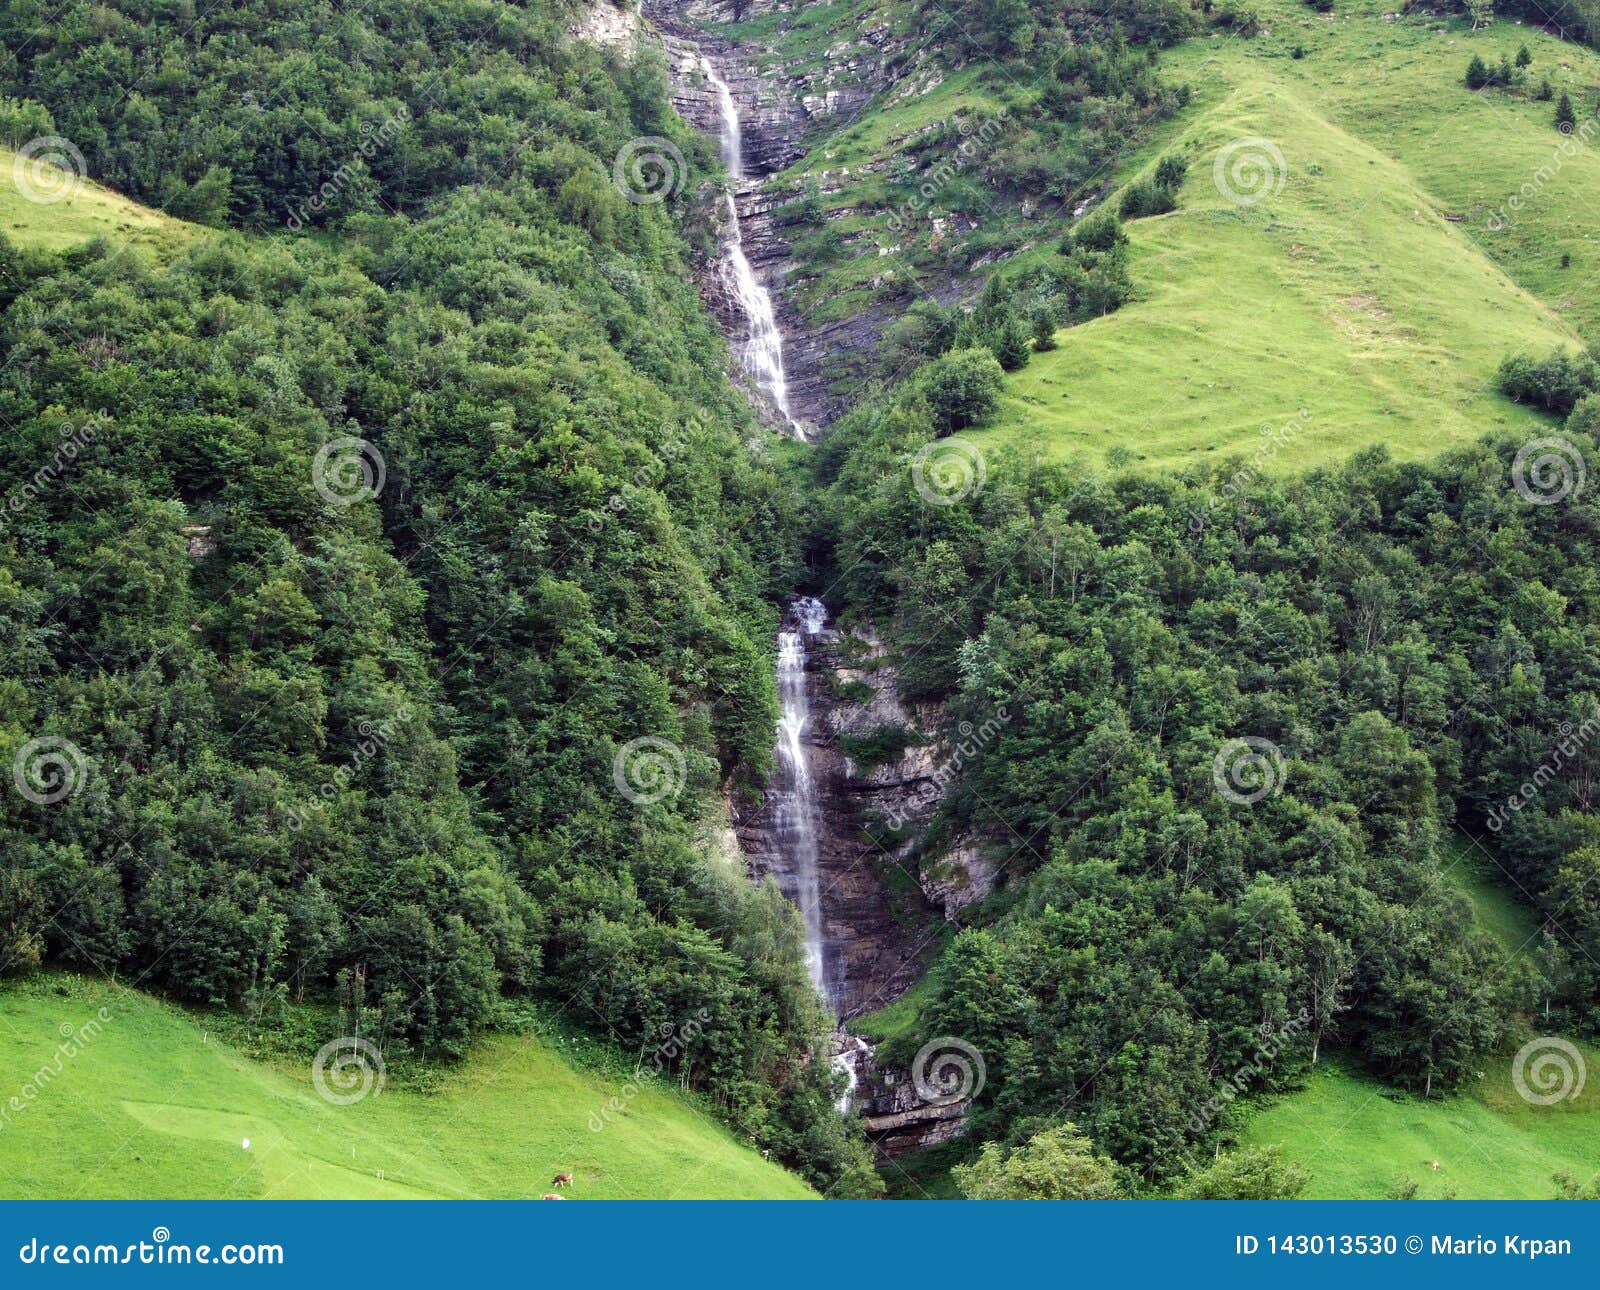 waterfall laubenfall in the sernftal alpine valley or wasserfÃÂ¤lle laubenfÃÂ¤lle